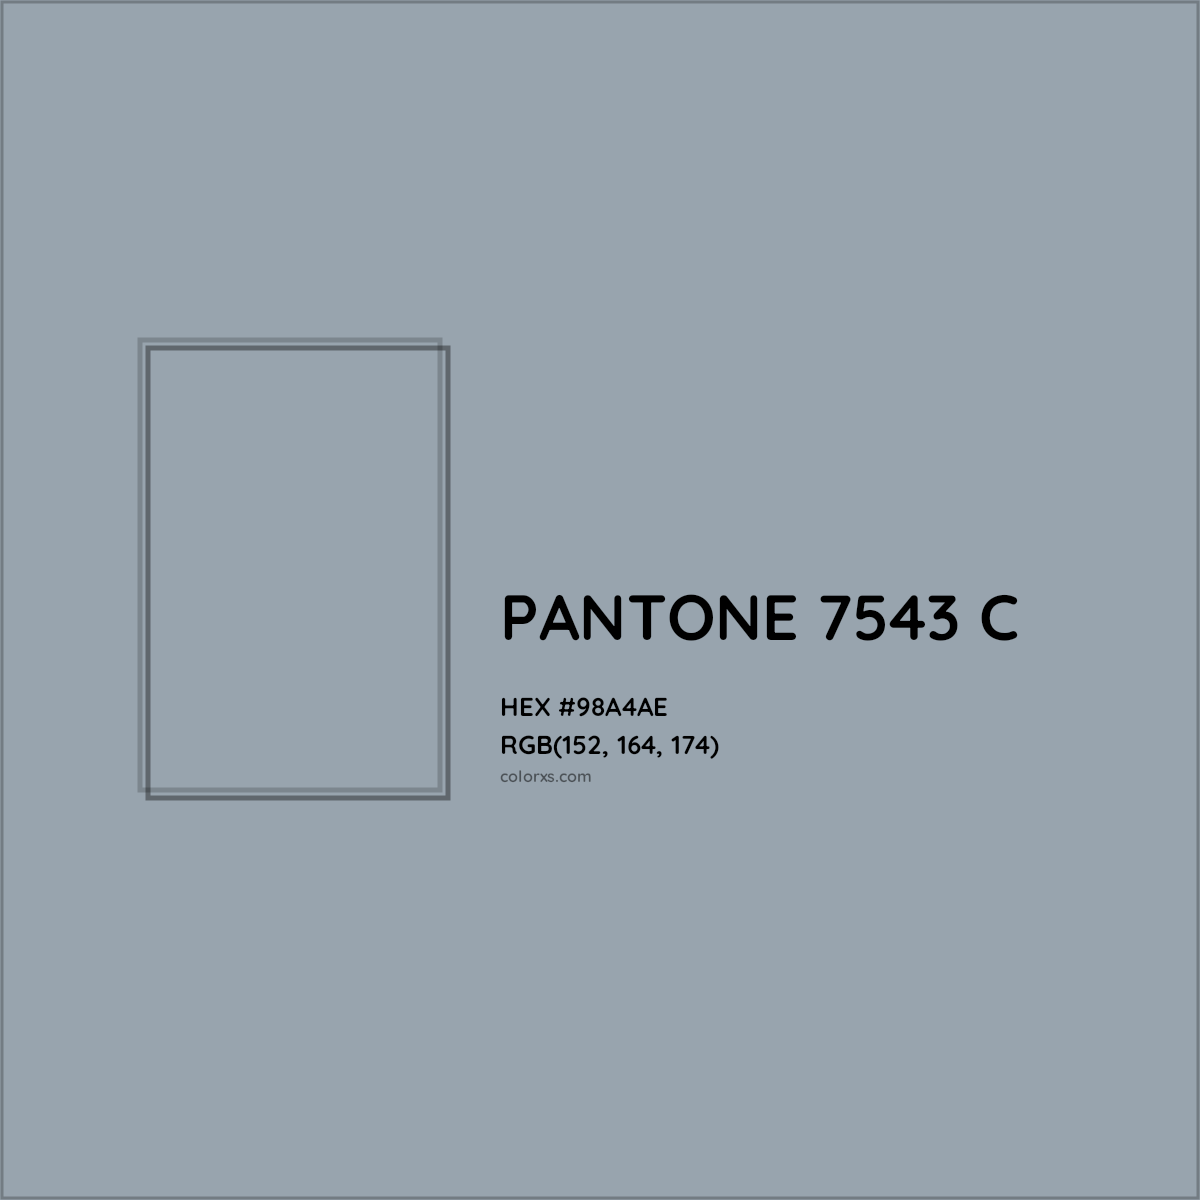 HEX #98A4AE PANTONE 7543 C CMS Pantone PMS - Color Code